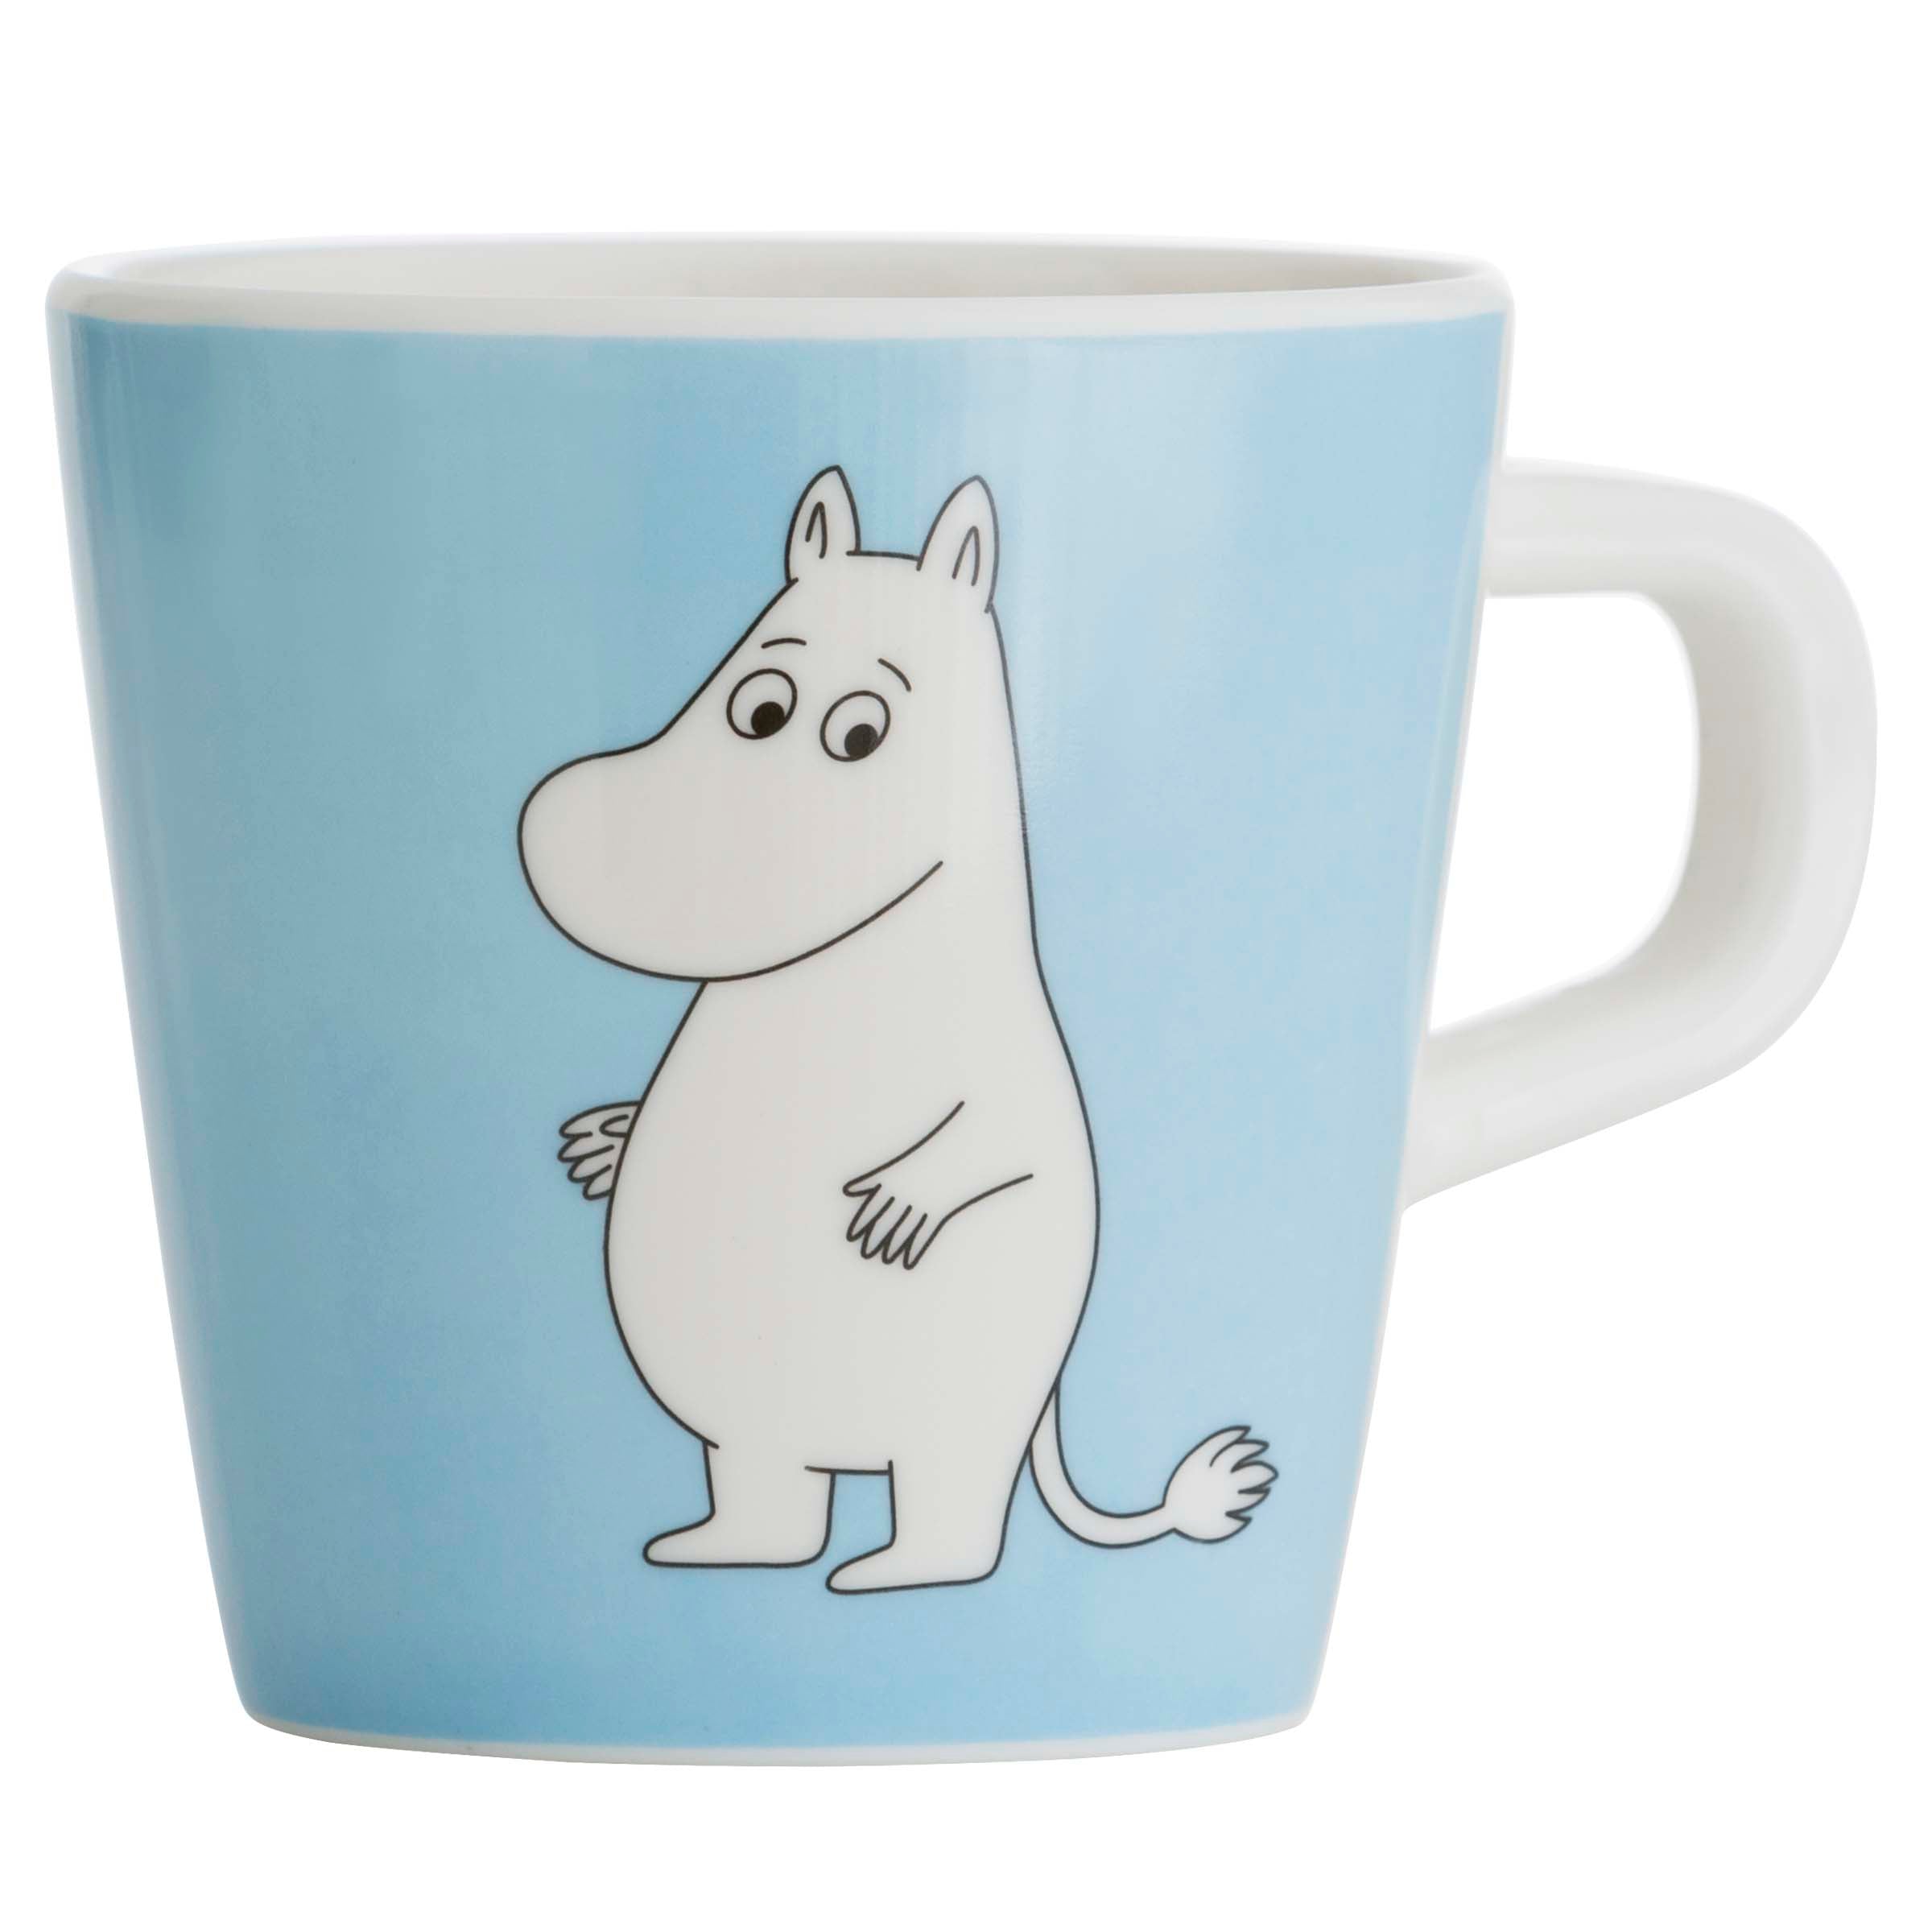 Moomin mug "Water & Bath", blue